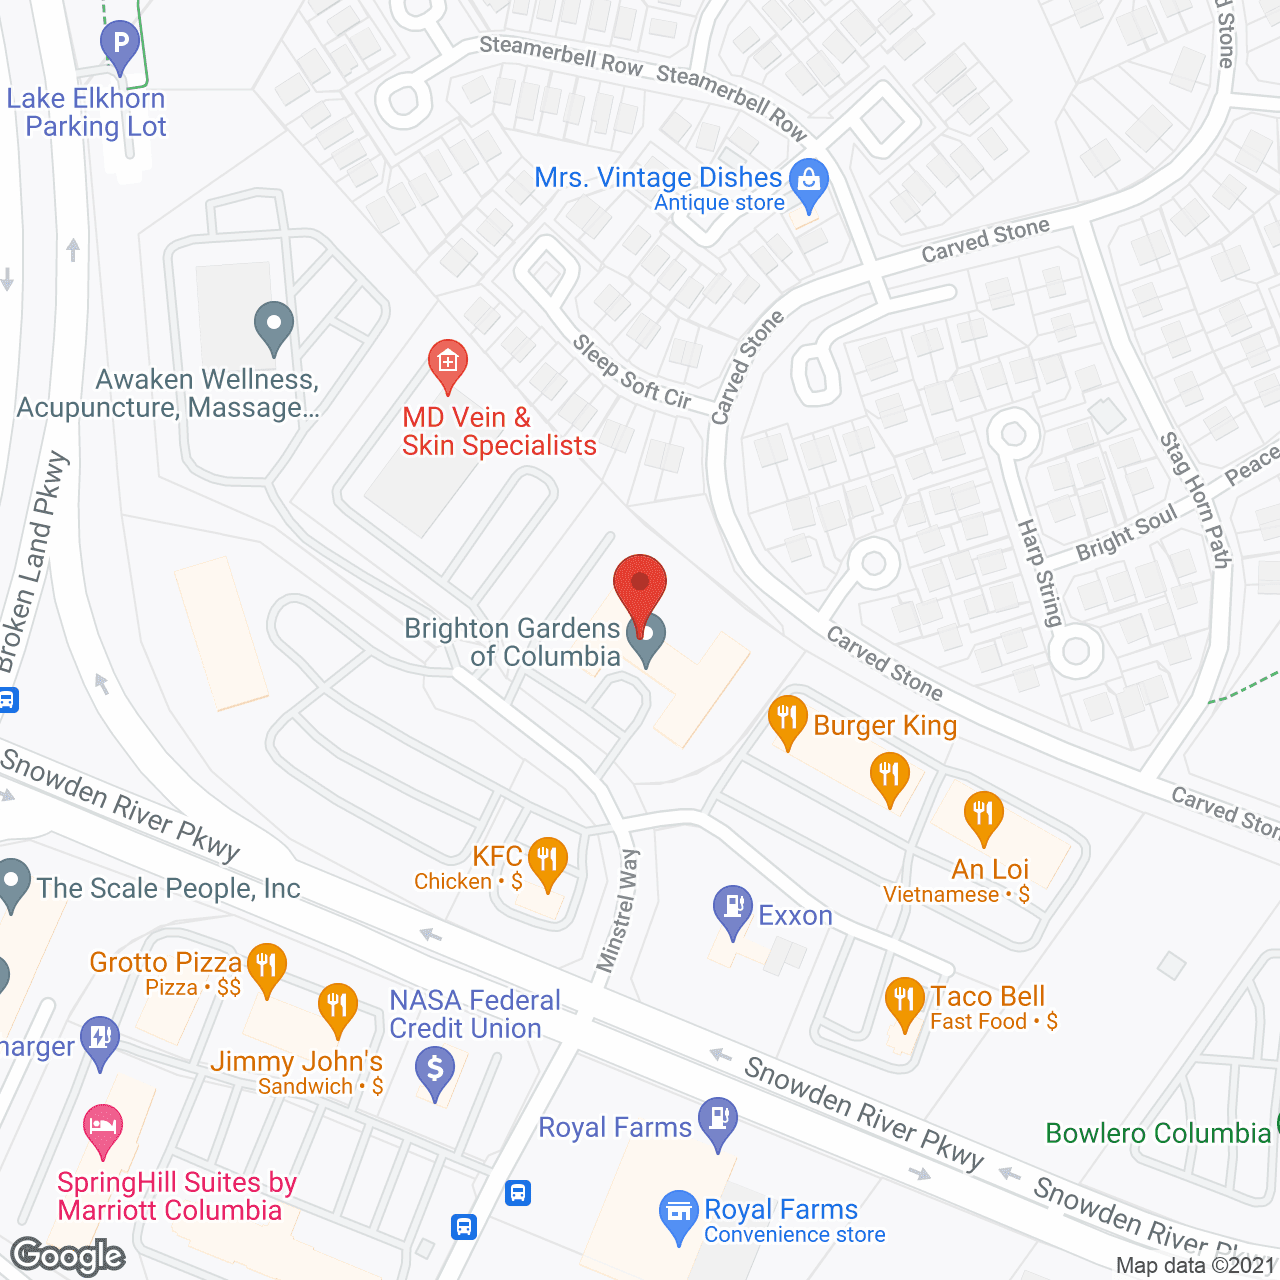 Brighton Gardens of Columbia in google map